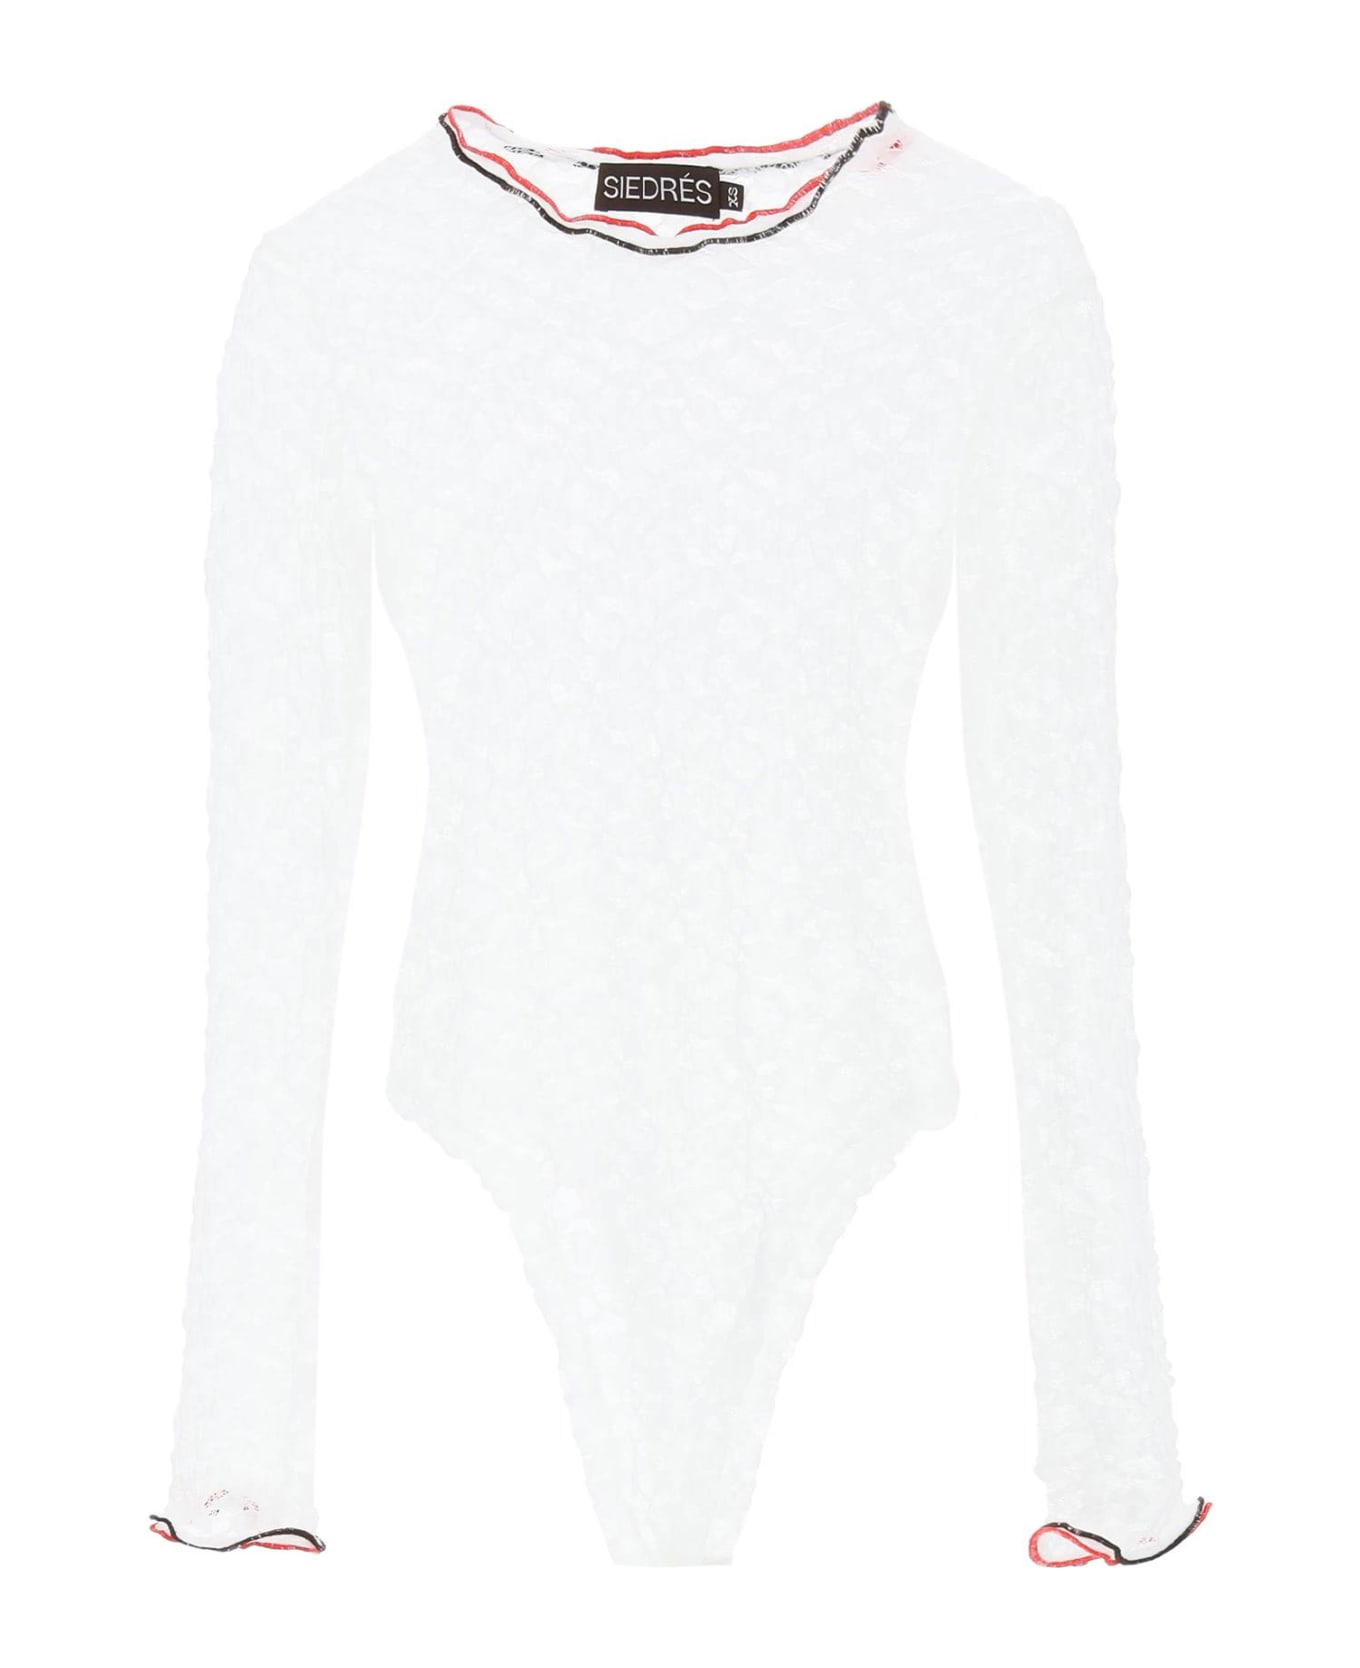 SIEDRES 'dixie' Stretch Lace Bodysuit - WHITE (White) ボディスーツ